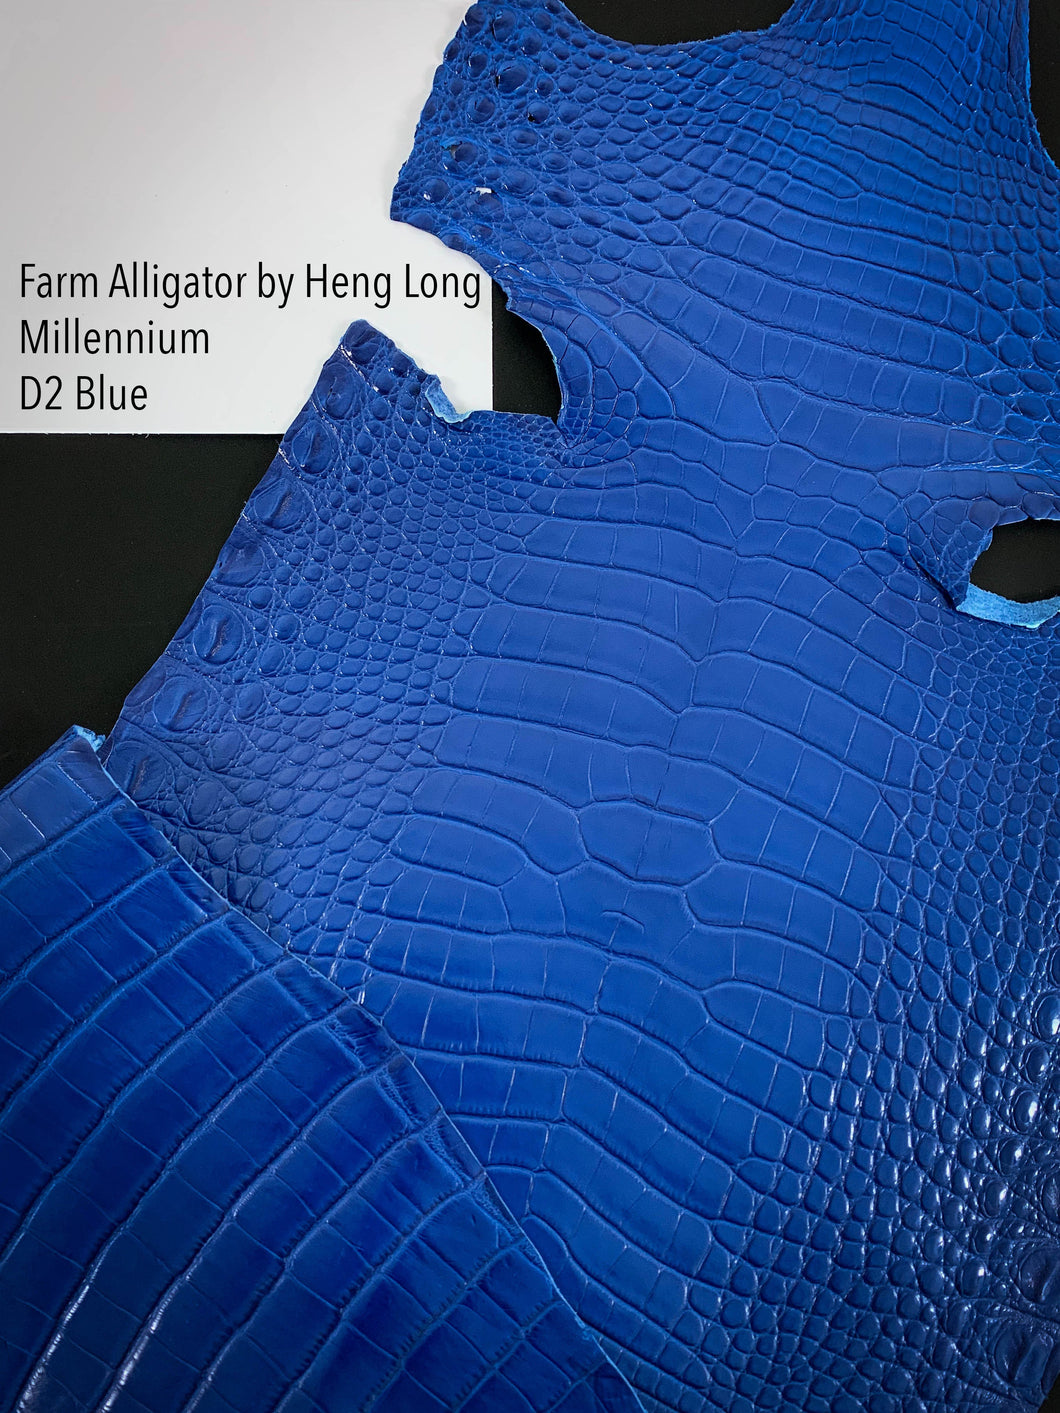 Farm Alligator Millennium Finish D2 Blue